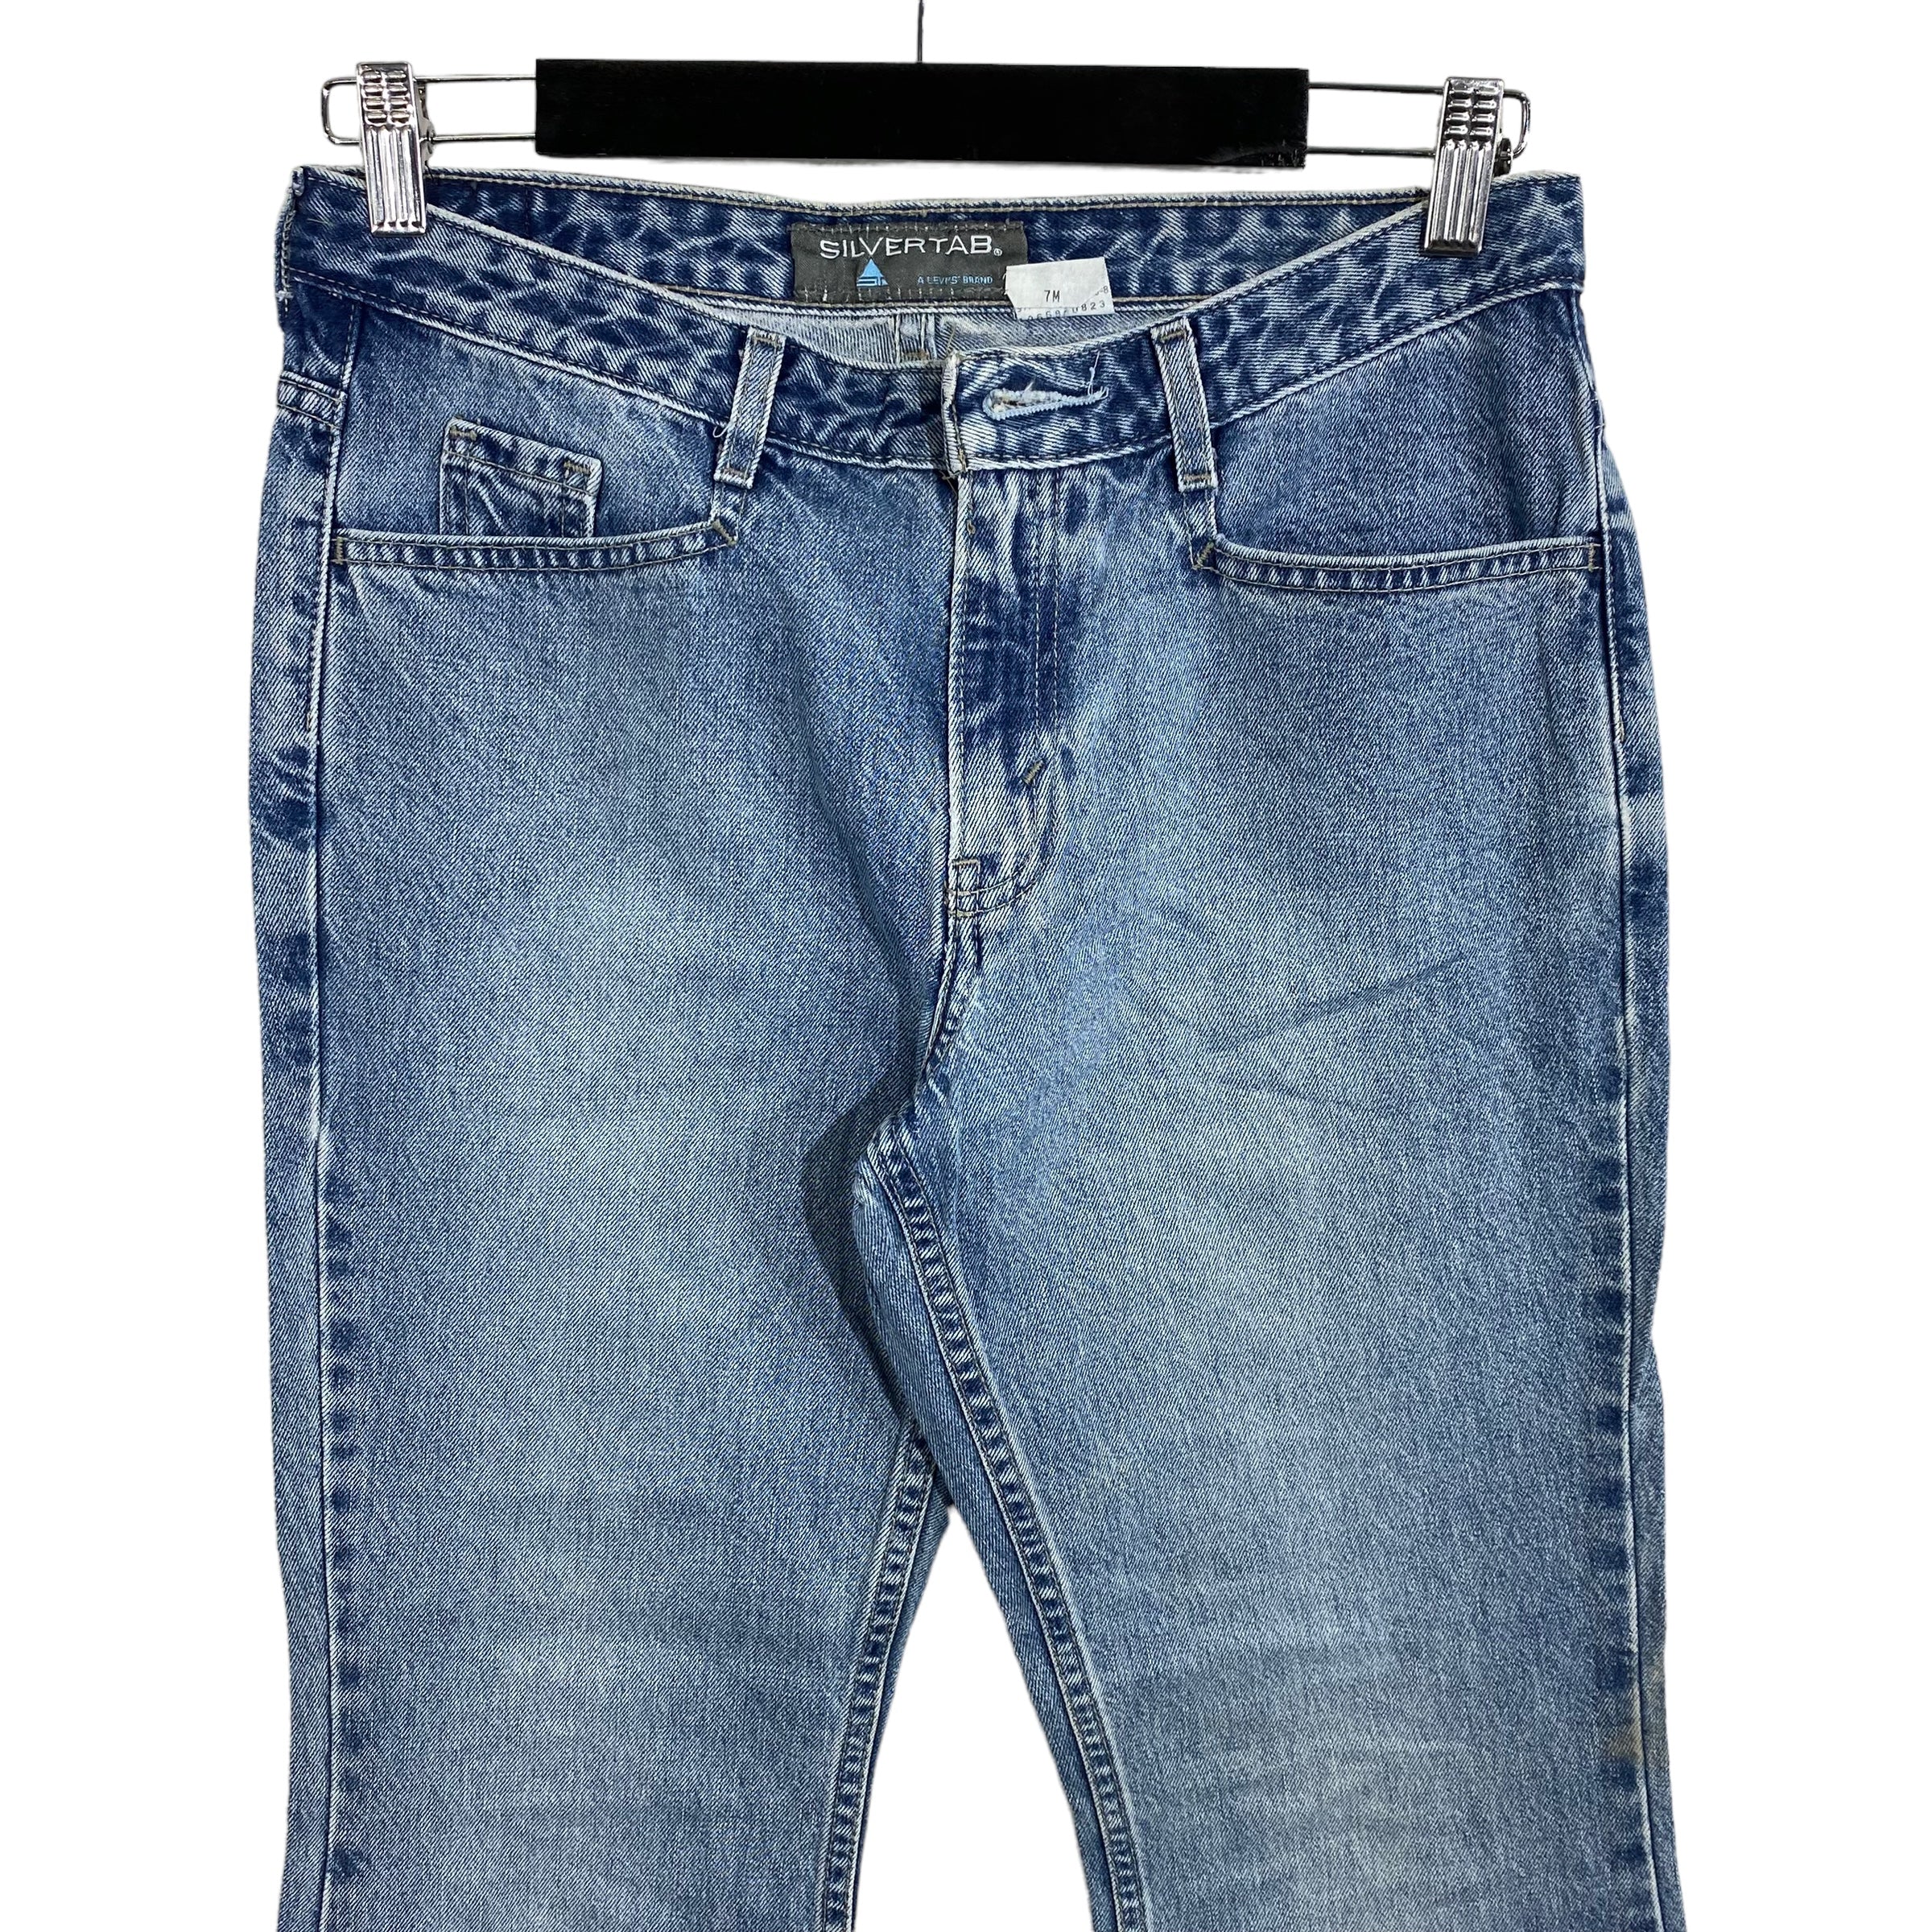 Vintage Levi's Silvertab Denim Jeans